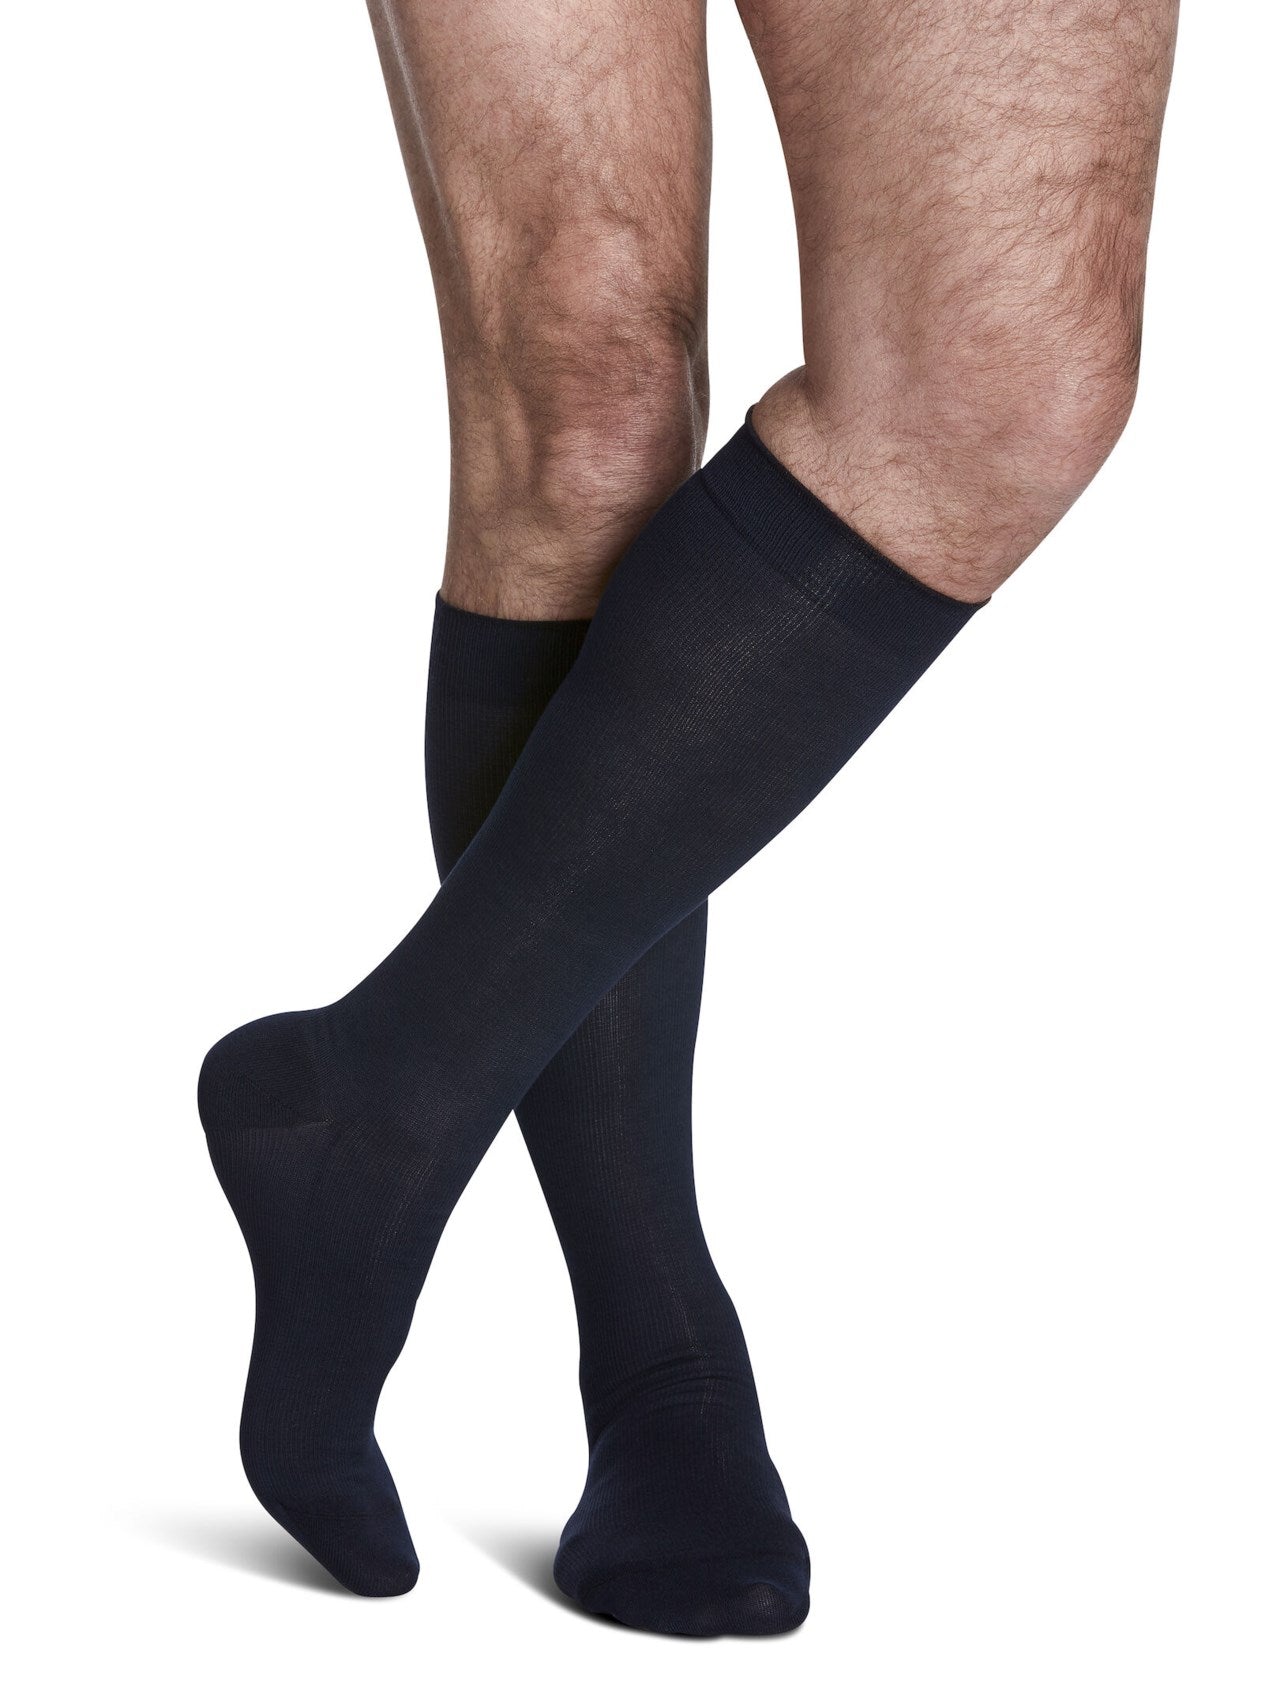 Sigvaris 220 Sea Island Cotton Compression Socks 20-30 mmHg Calf High for Men Closed Toe